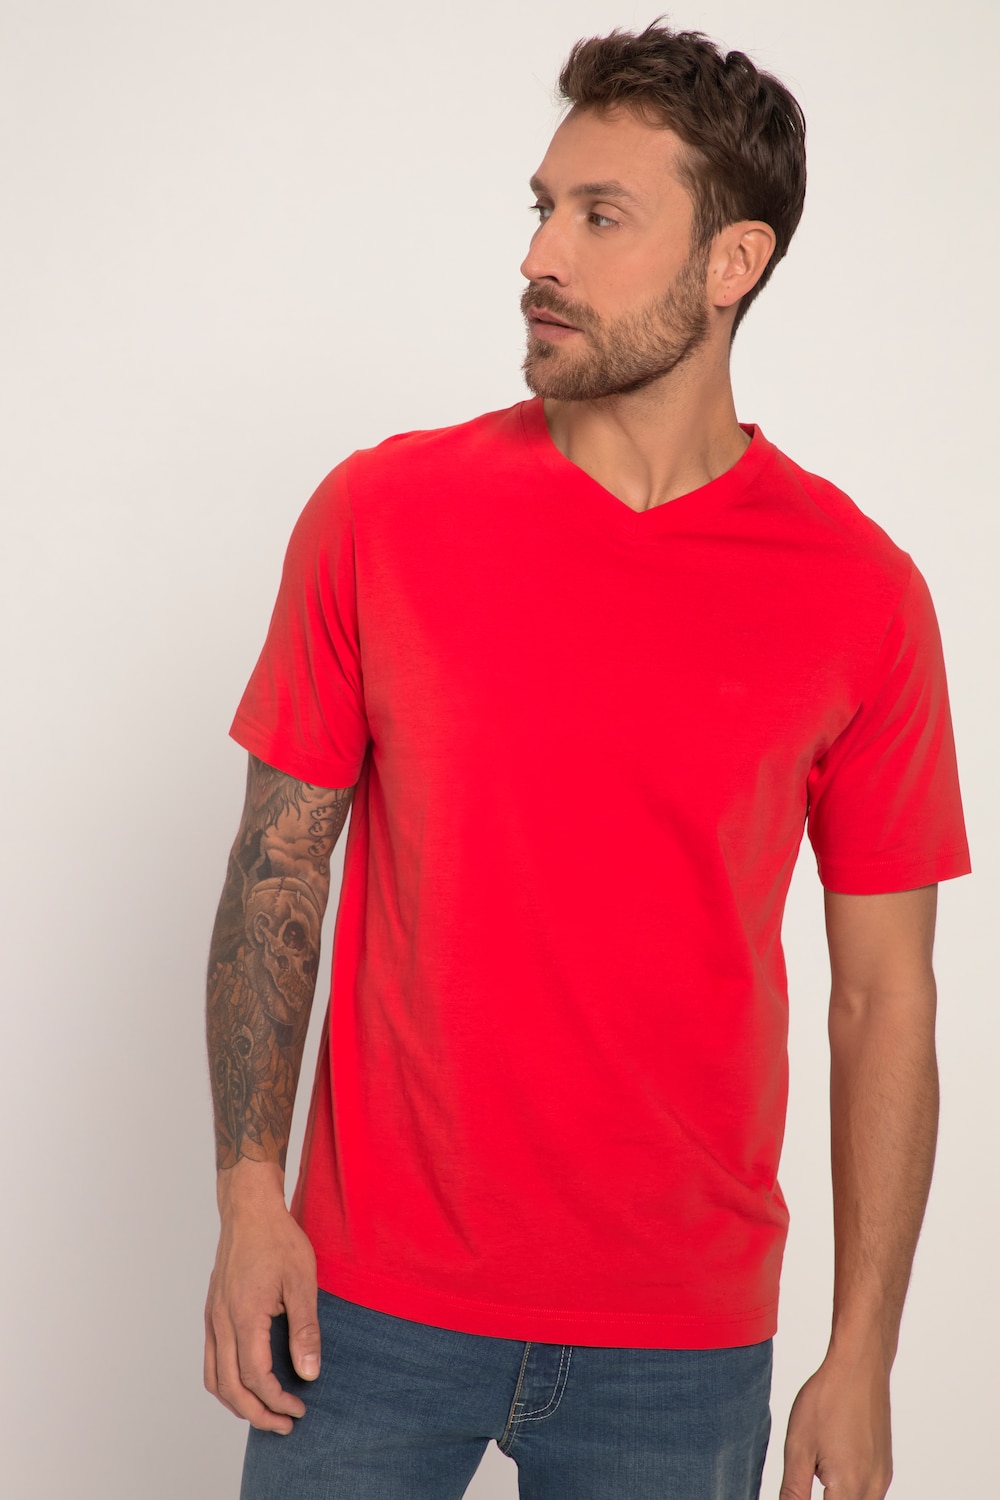 Grote Maten T-shirt, Heren, rood, Maat: 7XL, Katoen/Polyester, JP1880